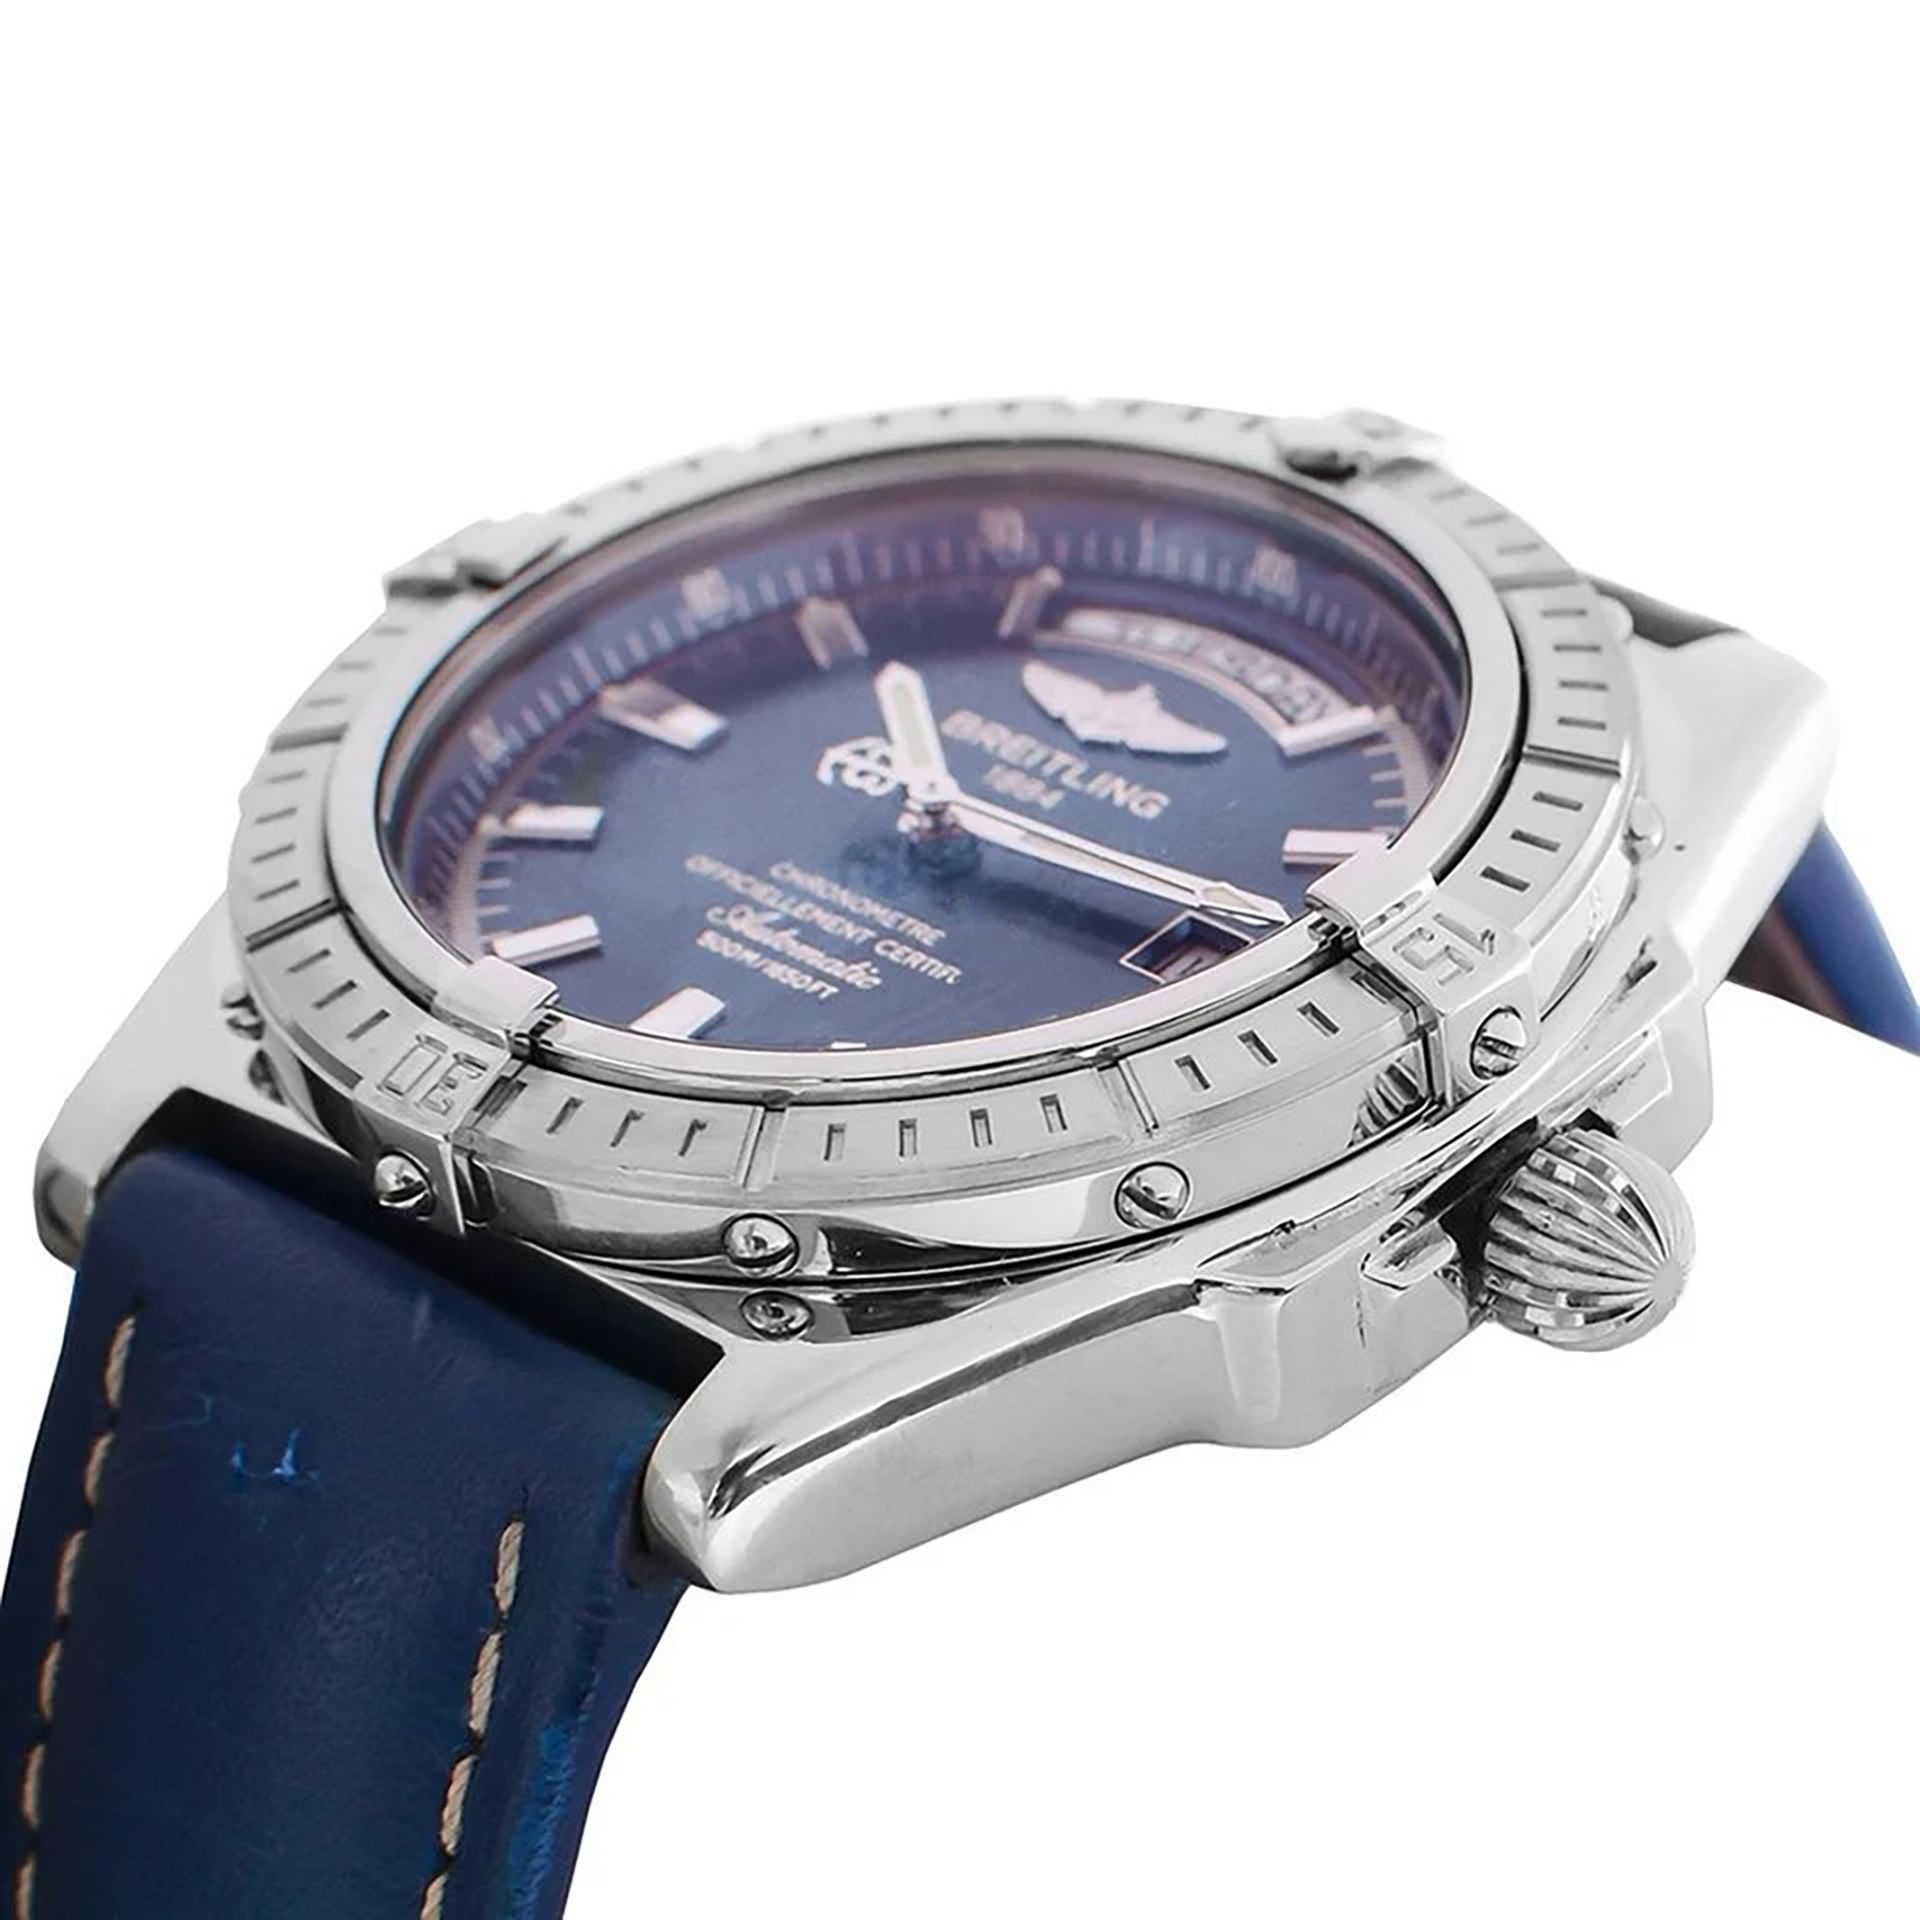 Breitling Headwind A45355 automatic steel wristwatch - Image 6 of 7